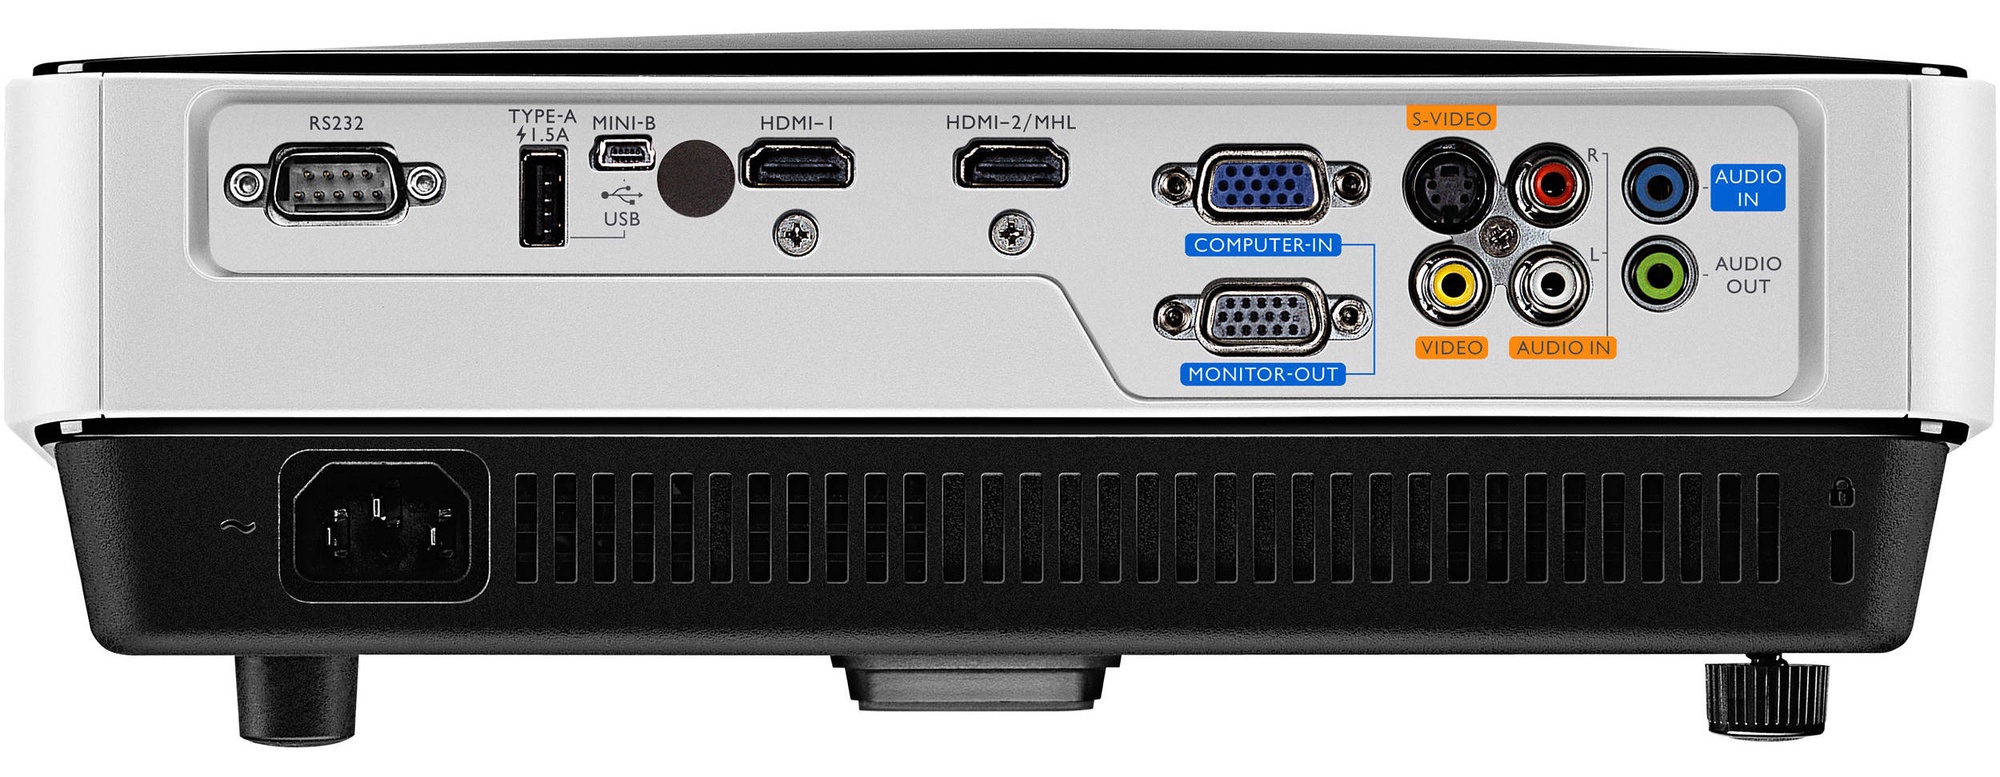 PROYECTOR BENQ DLP MX631ST 3D, 3200 LÚMENES, HDMI, USB